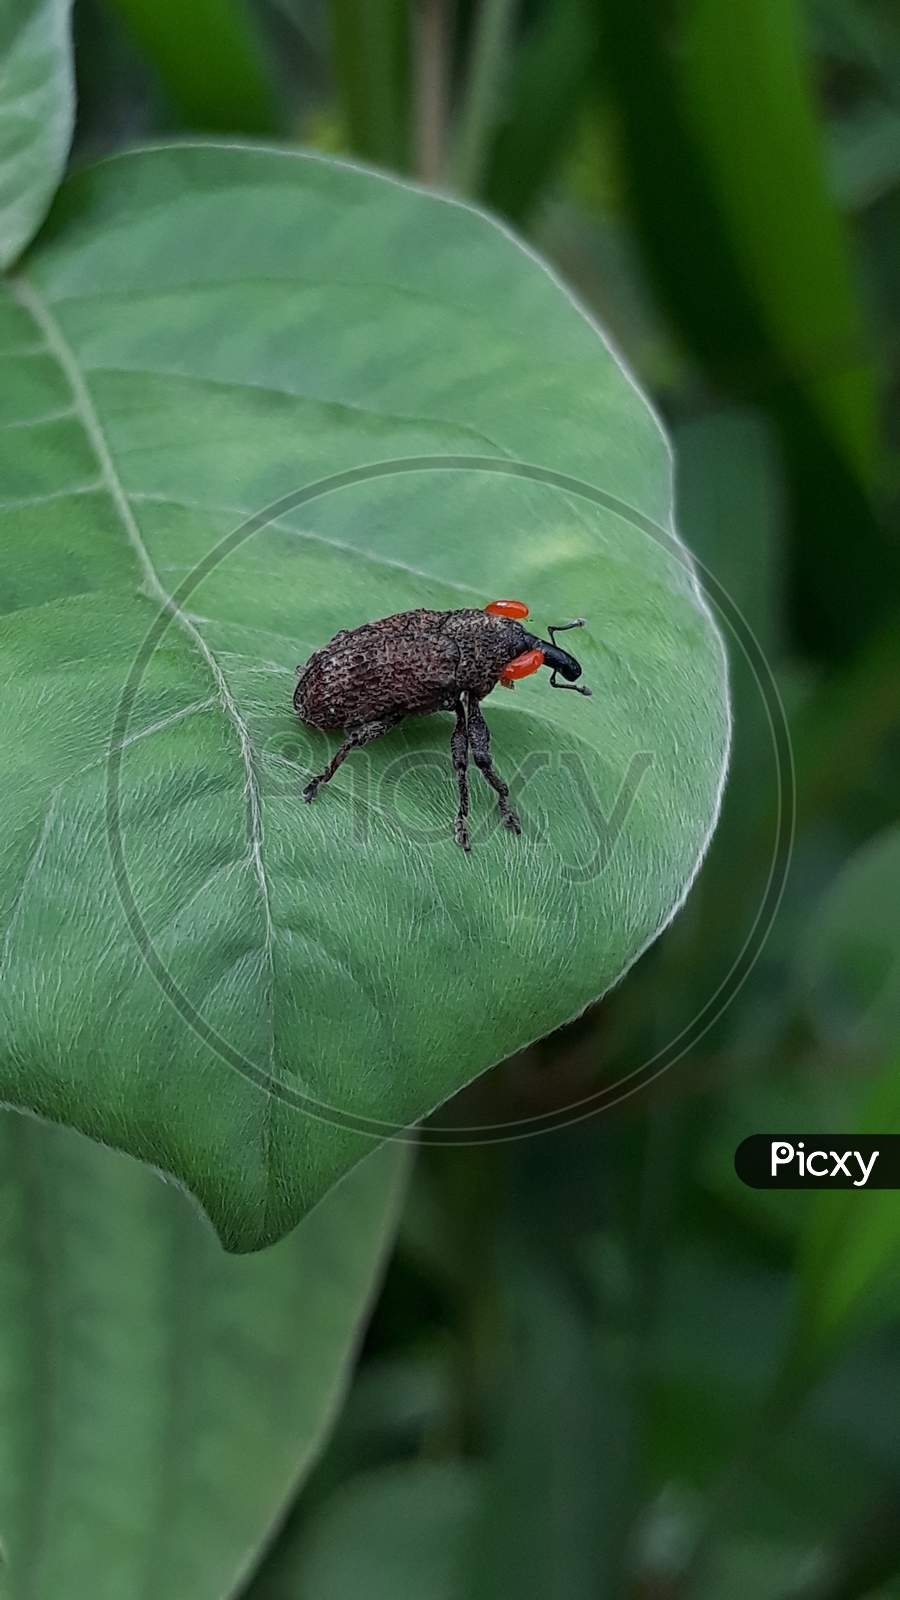 Big red eye weevil very rare image